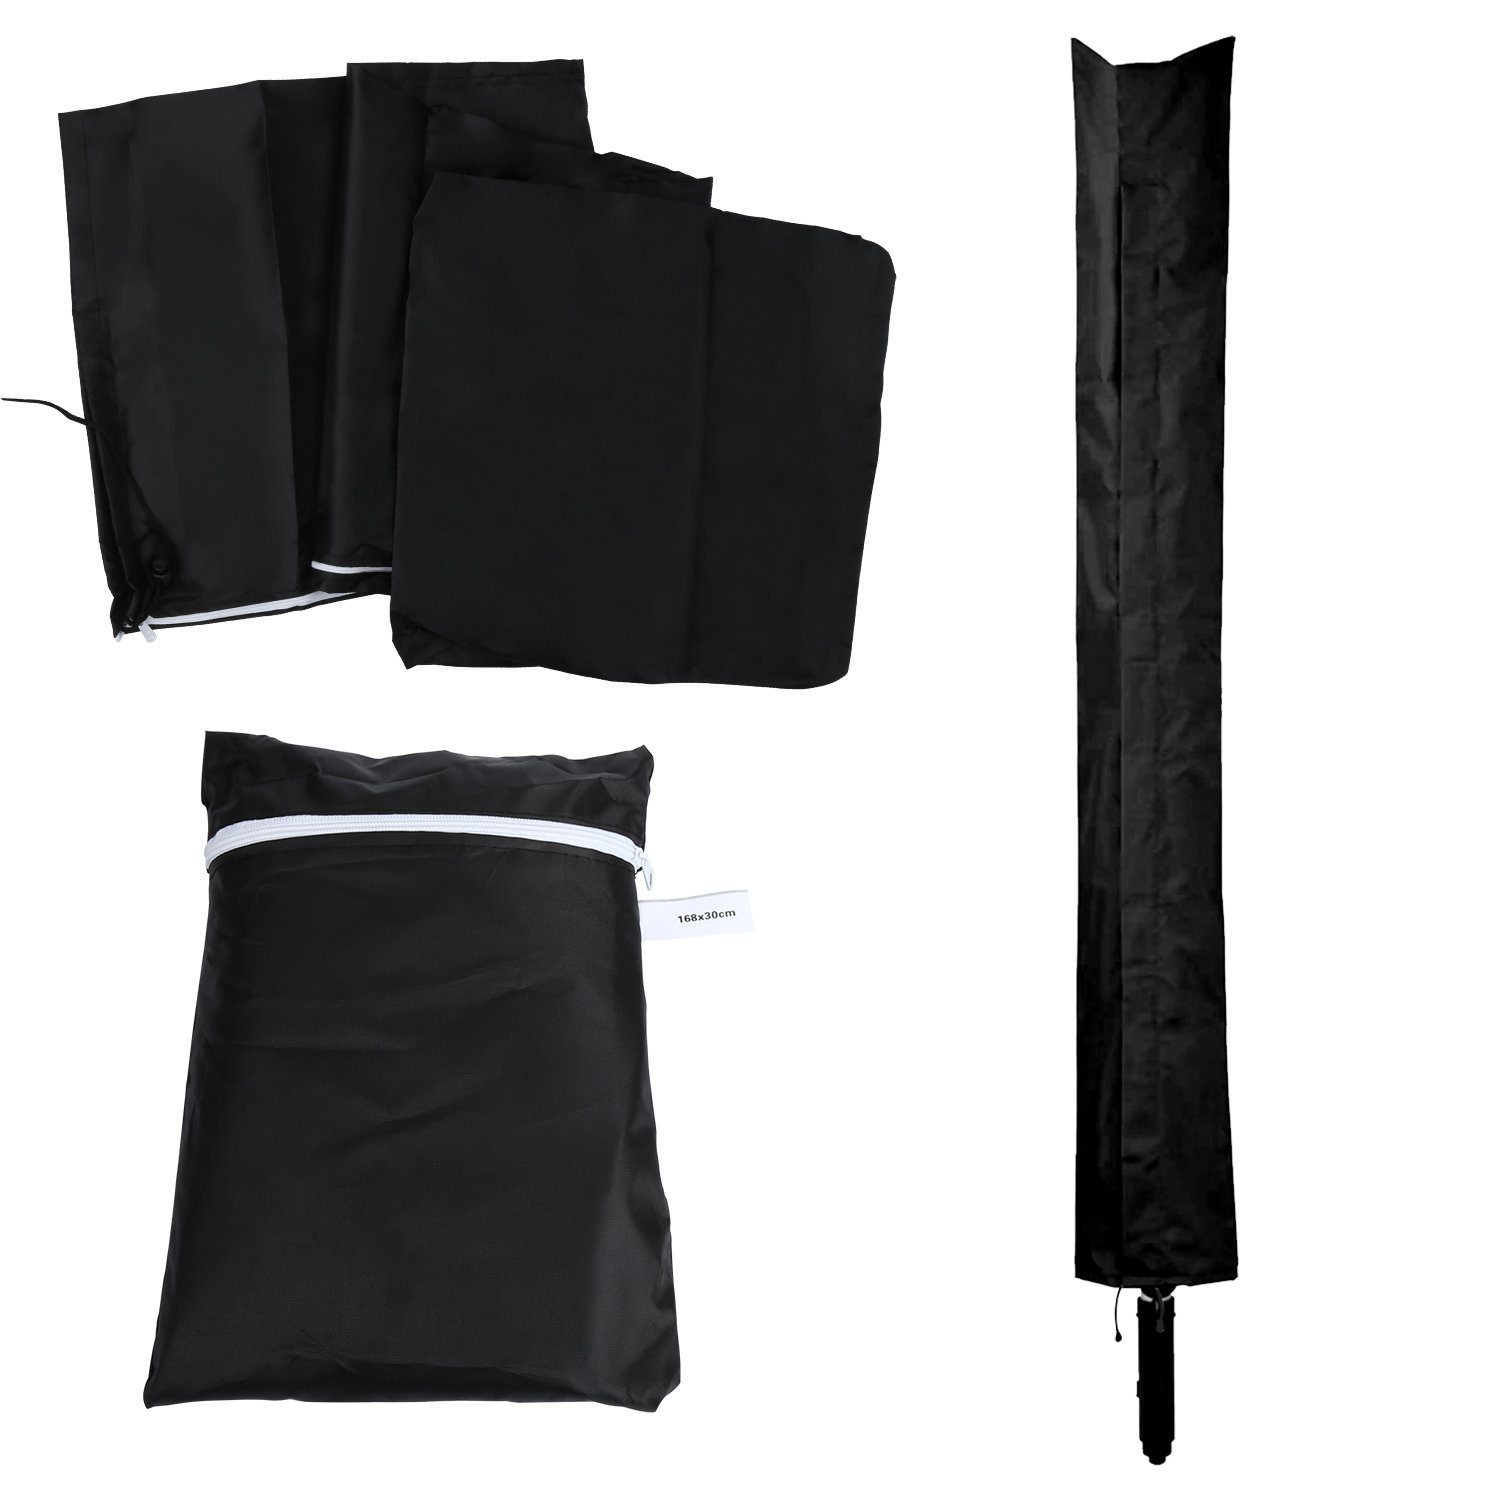 Clanmacy Wäschespinne-Schutzhülle Wäschespinne Wäschespinne Wäschespinne Premium für Überzug schutzhülle 168x28cm